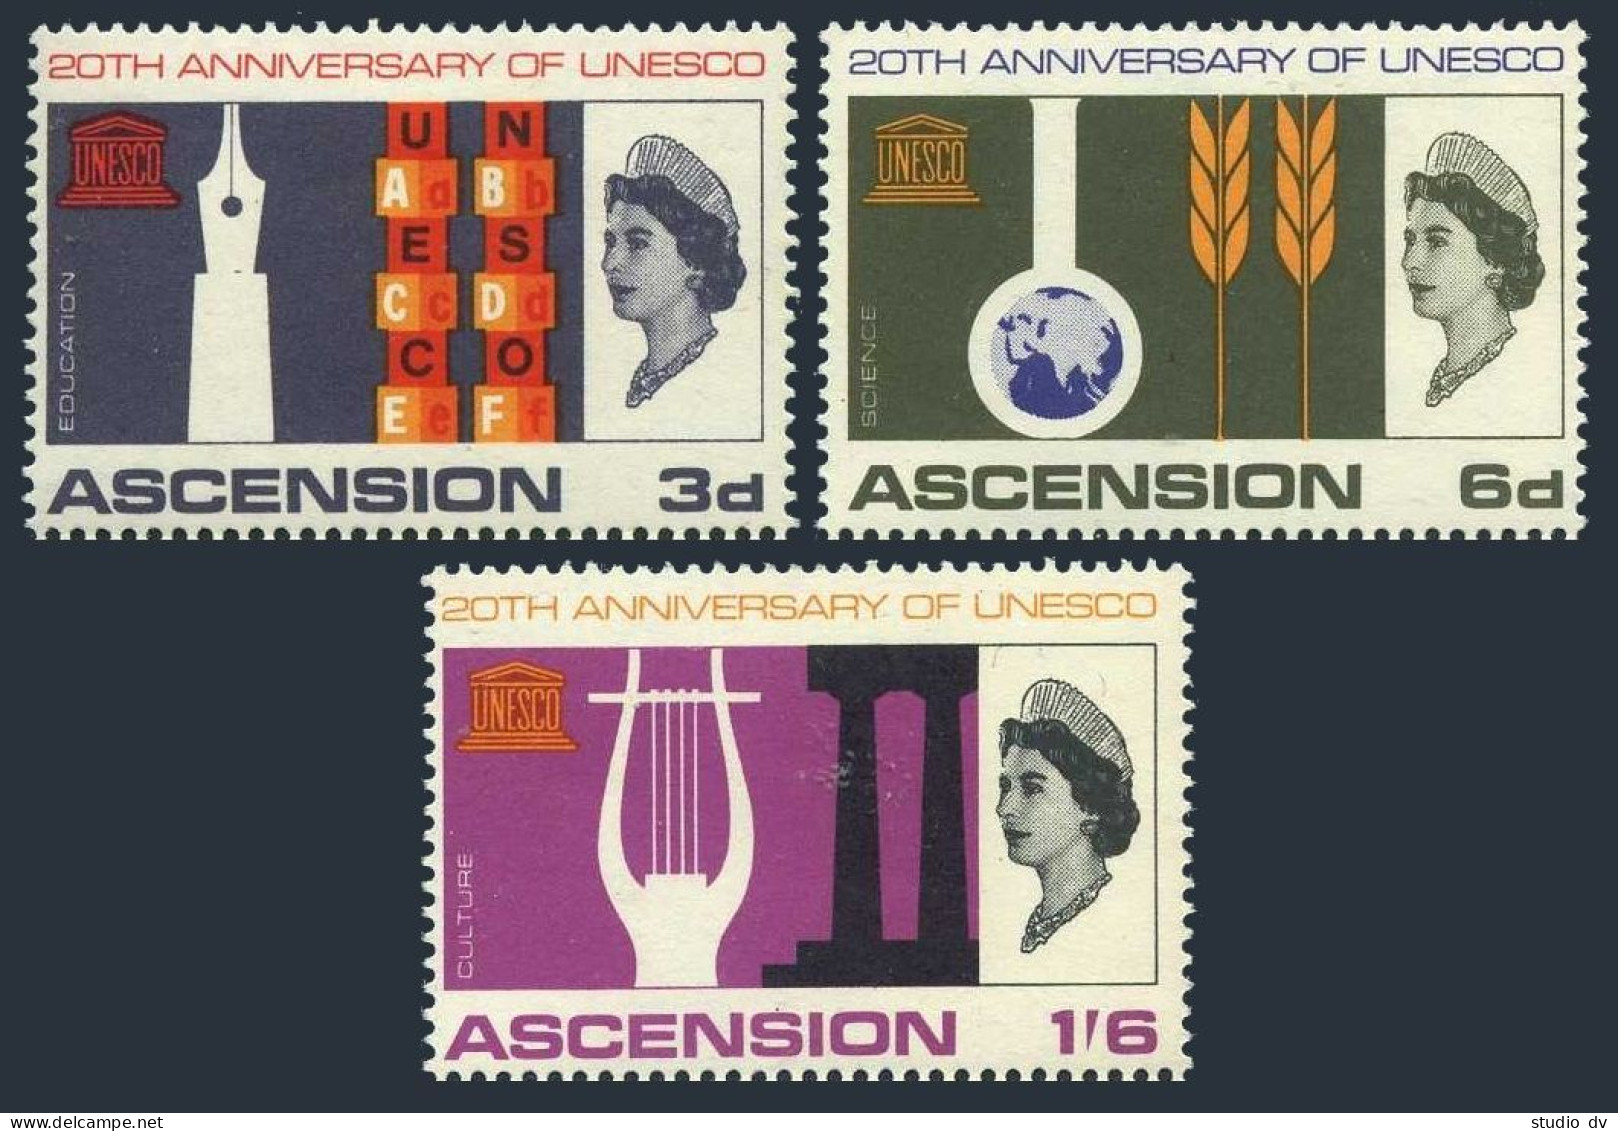 Ascension 108-110, MNH. Mi 112-114. UNESCO-20, 1967. Education, Science,Culture. - Ascension